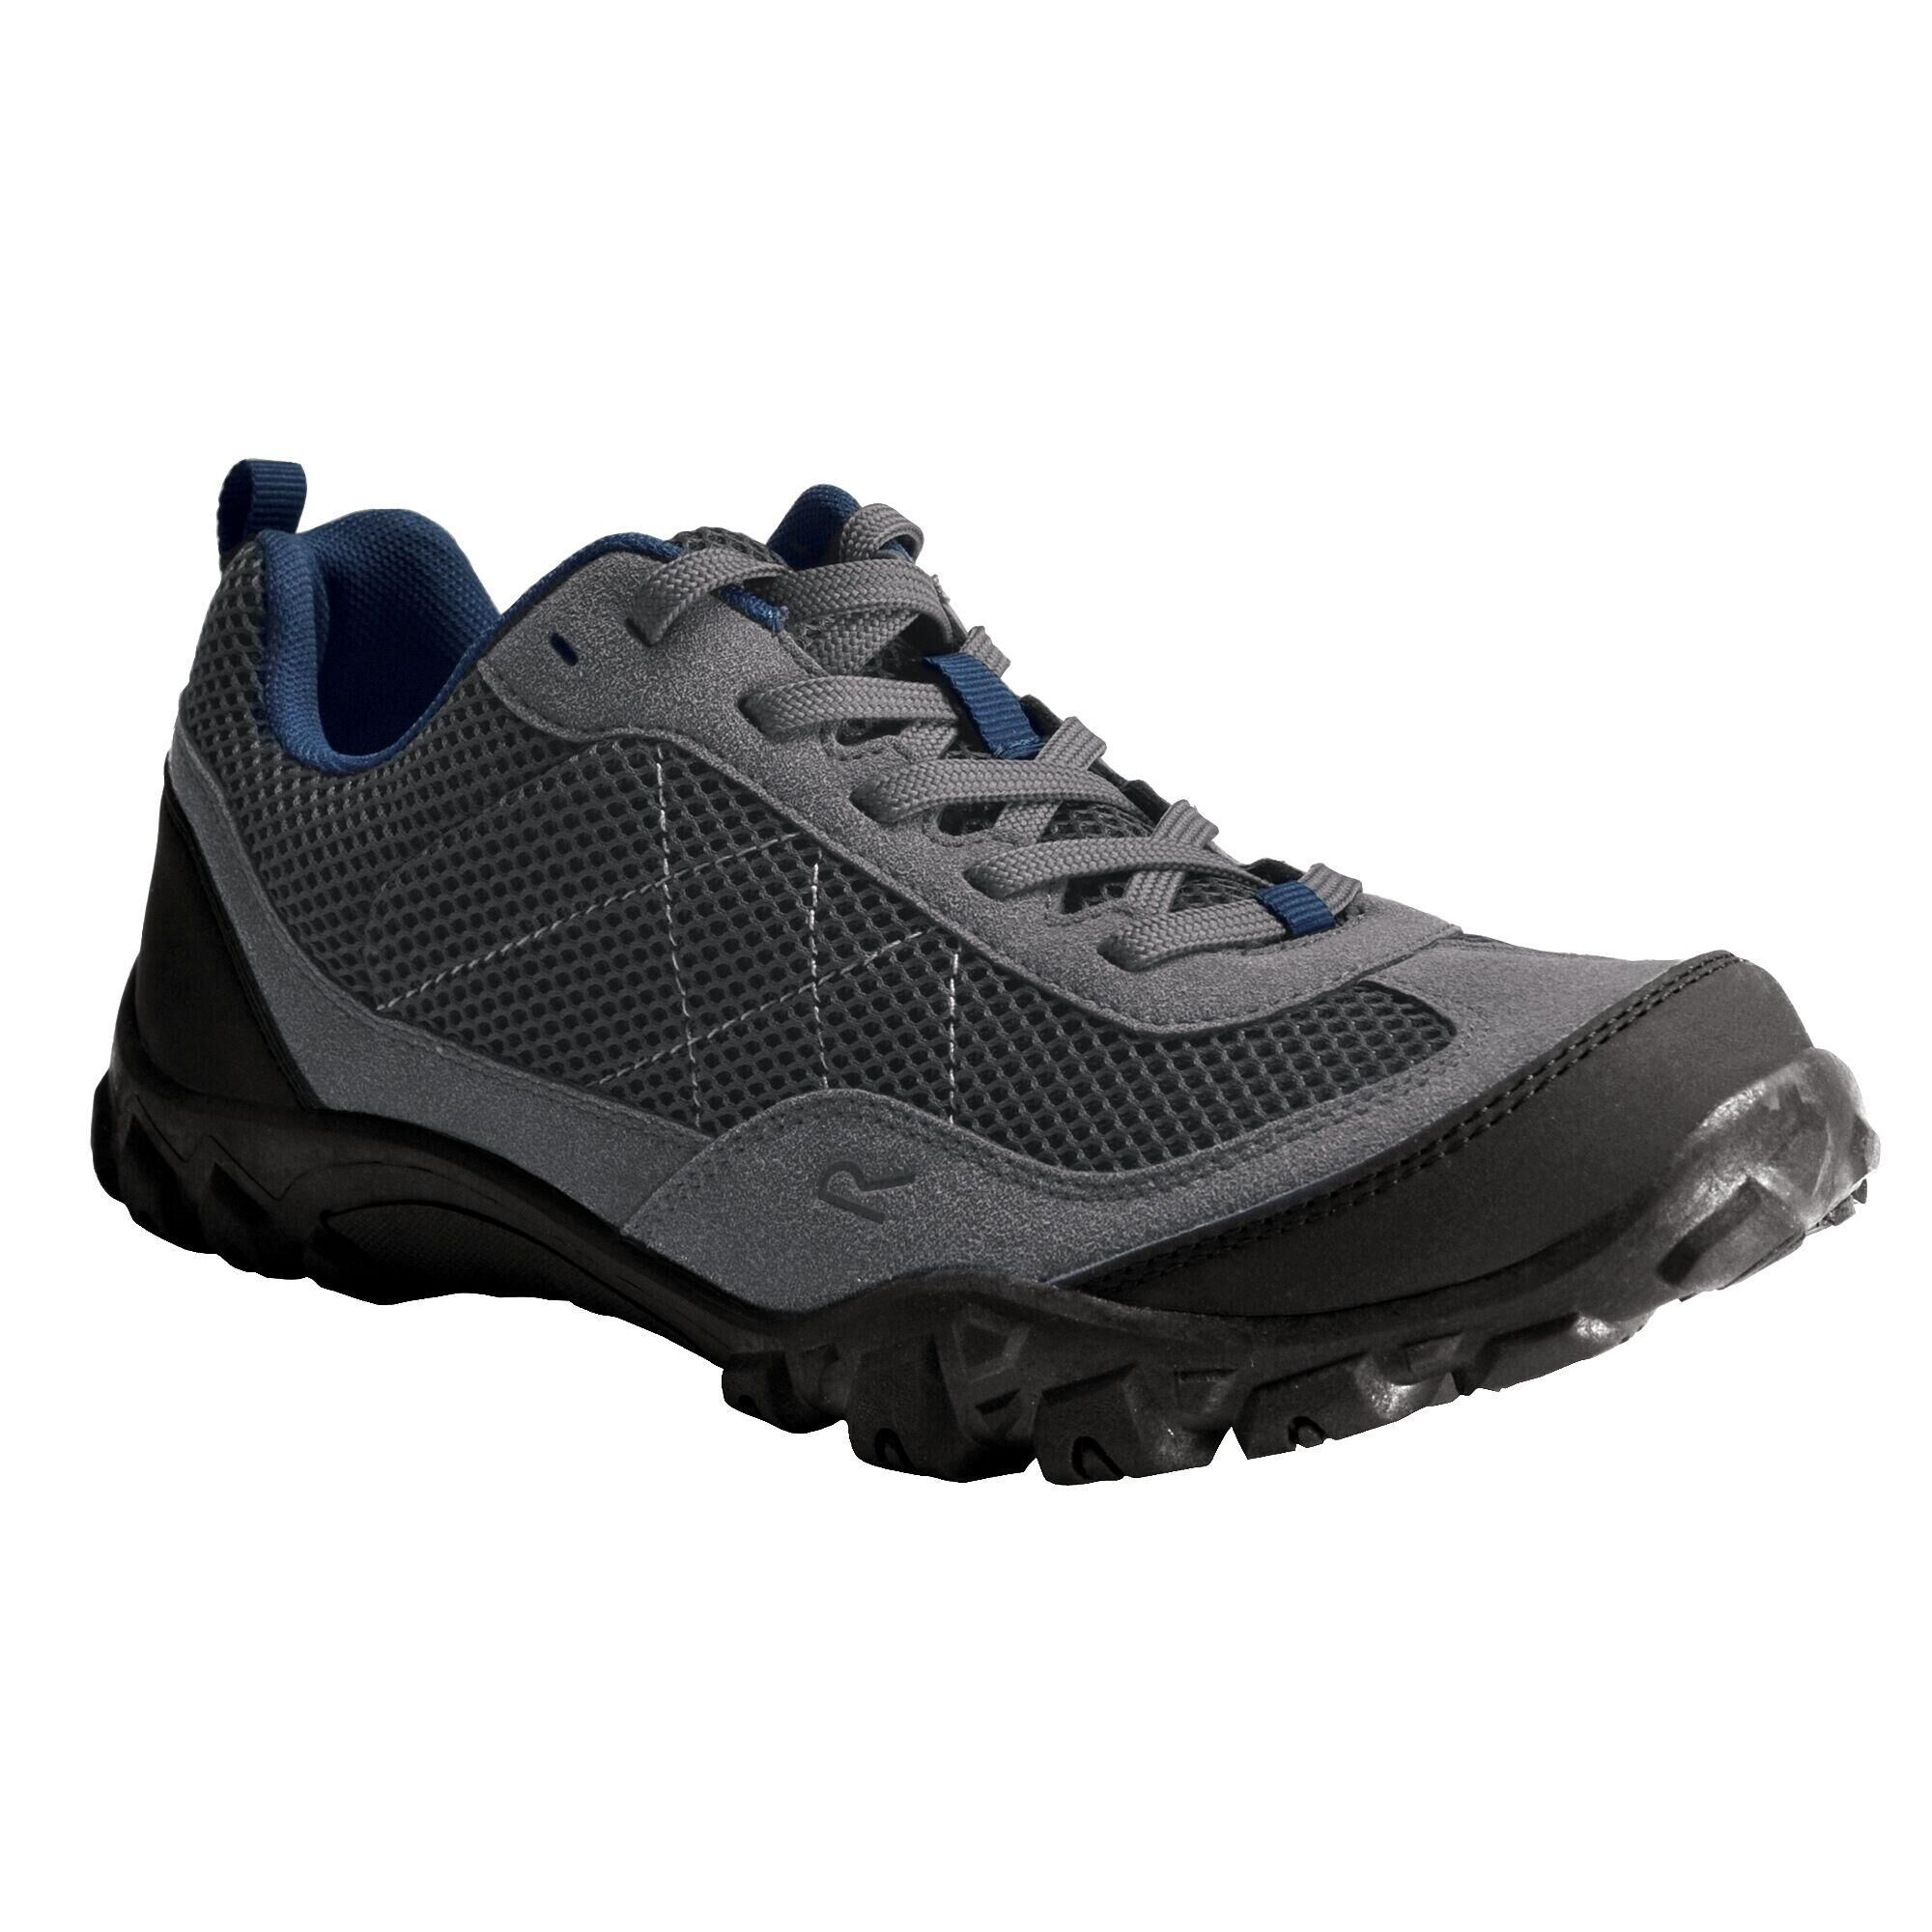 REGATTA Edgepoint Life Men's Walking Shoes - Granite Grey